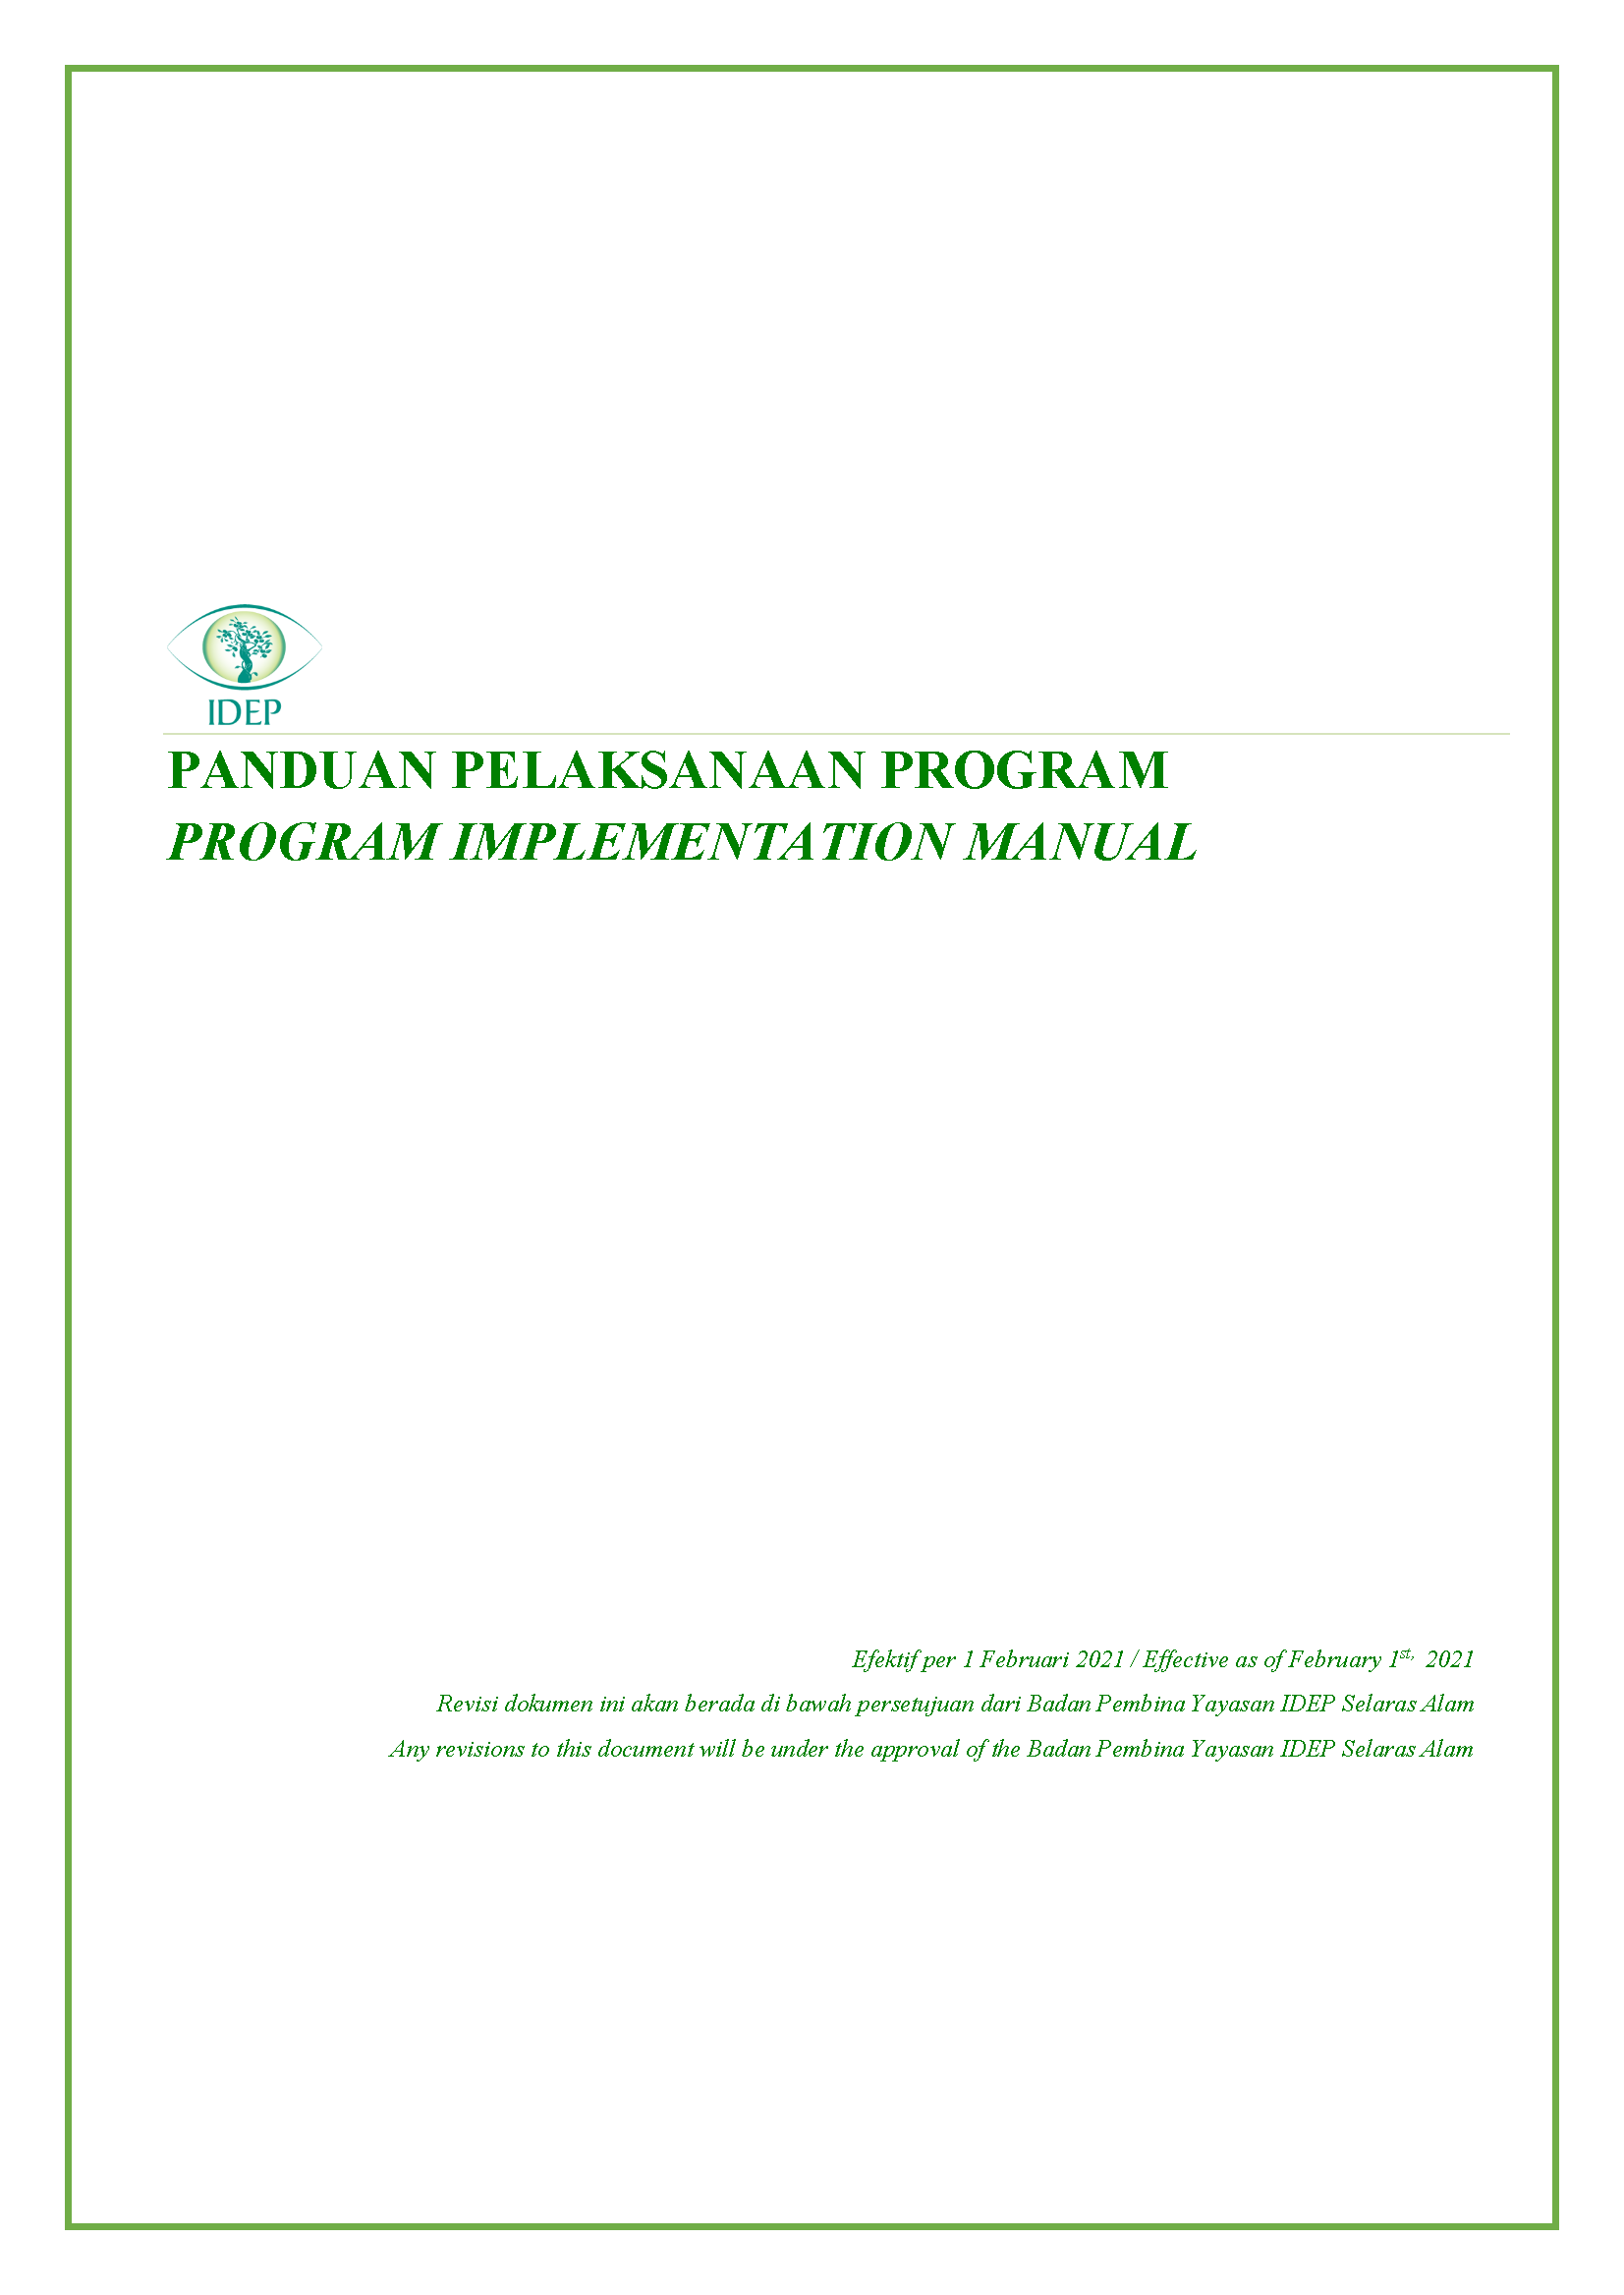 IDEP Foundation Program Implementation Manual